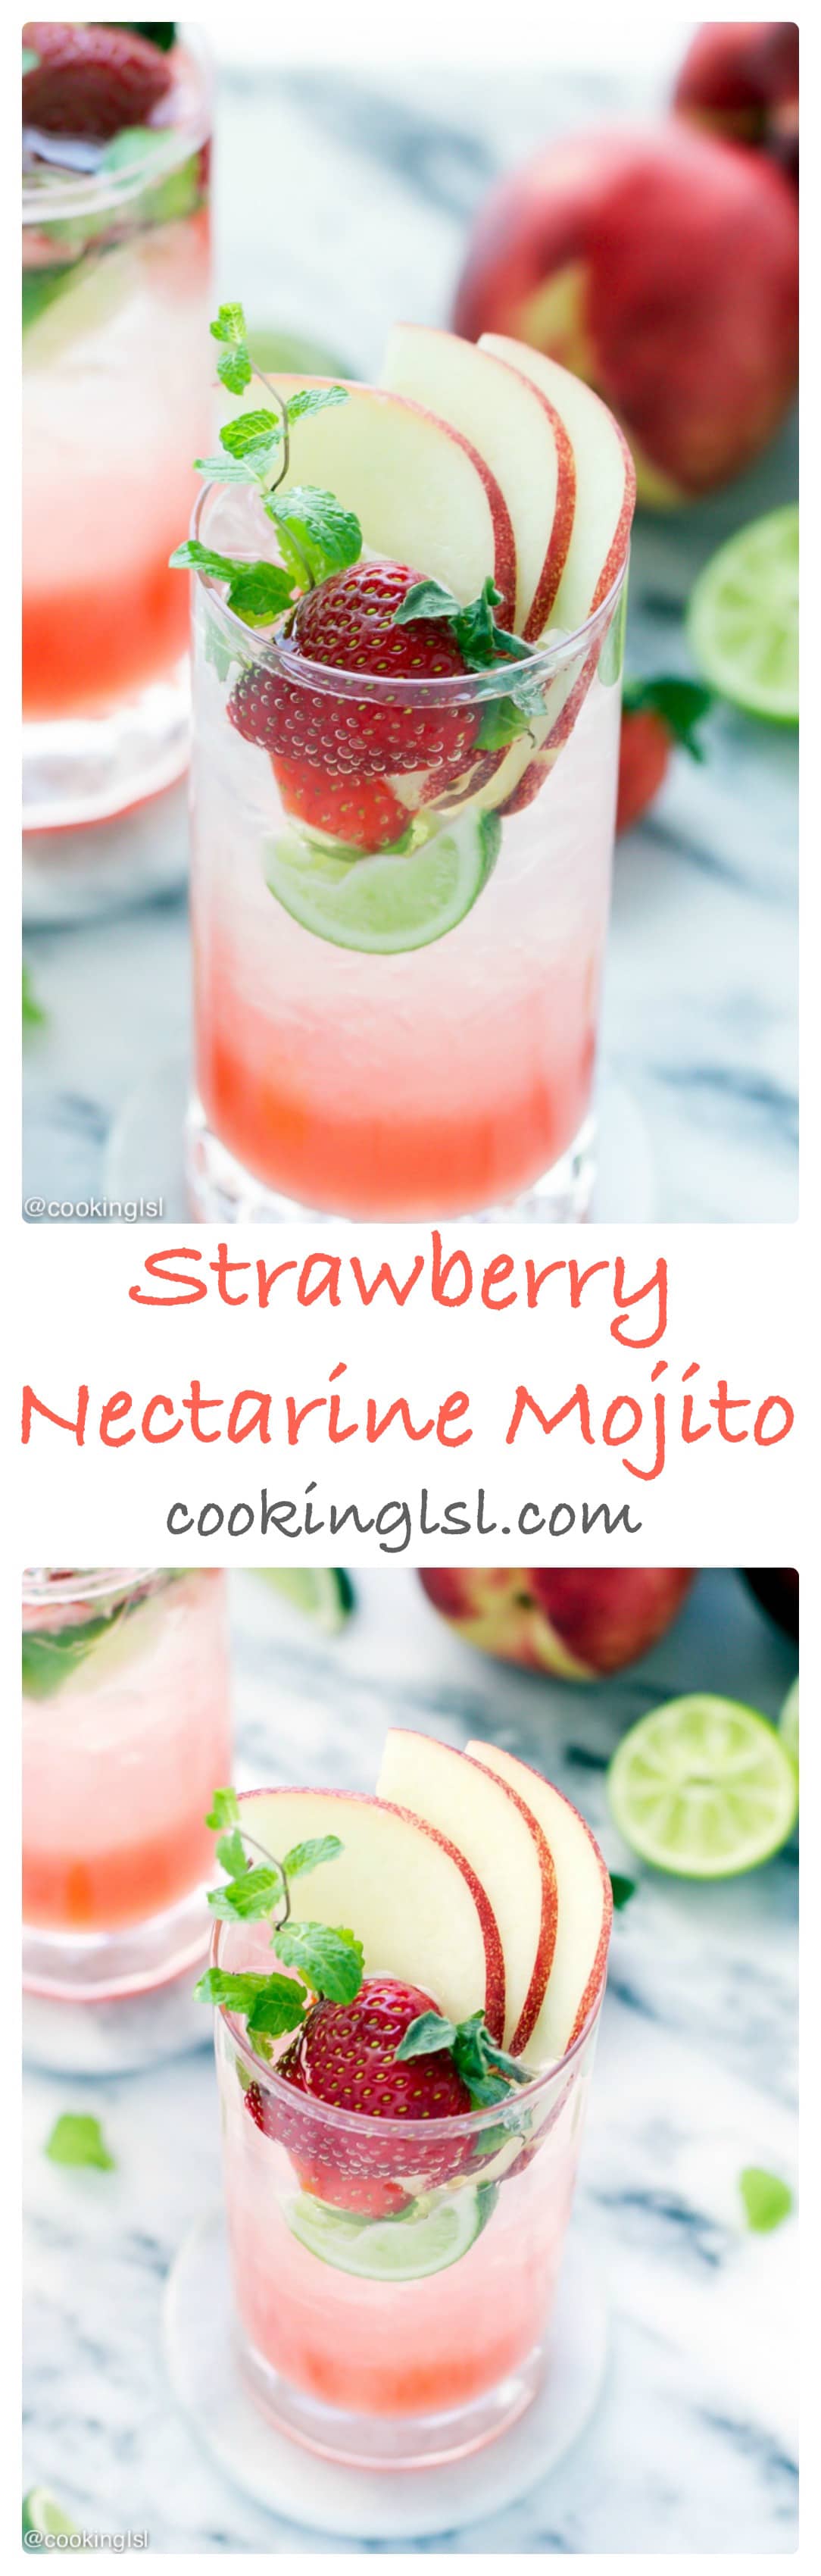 strawberry-nectarine-mojito-valentines-day